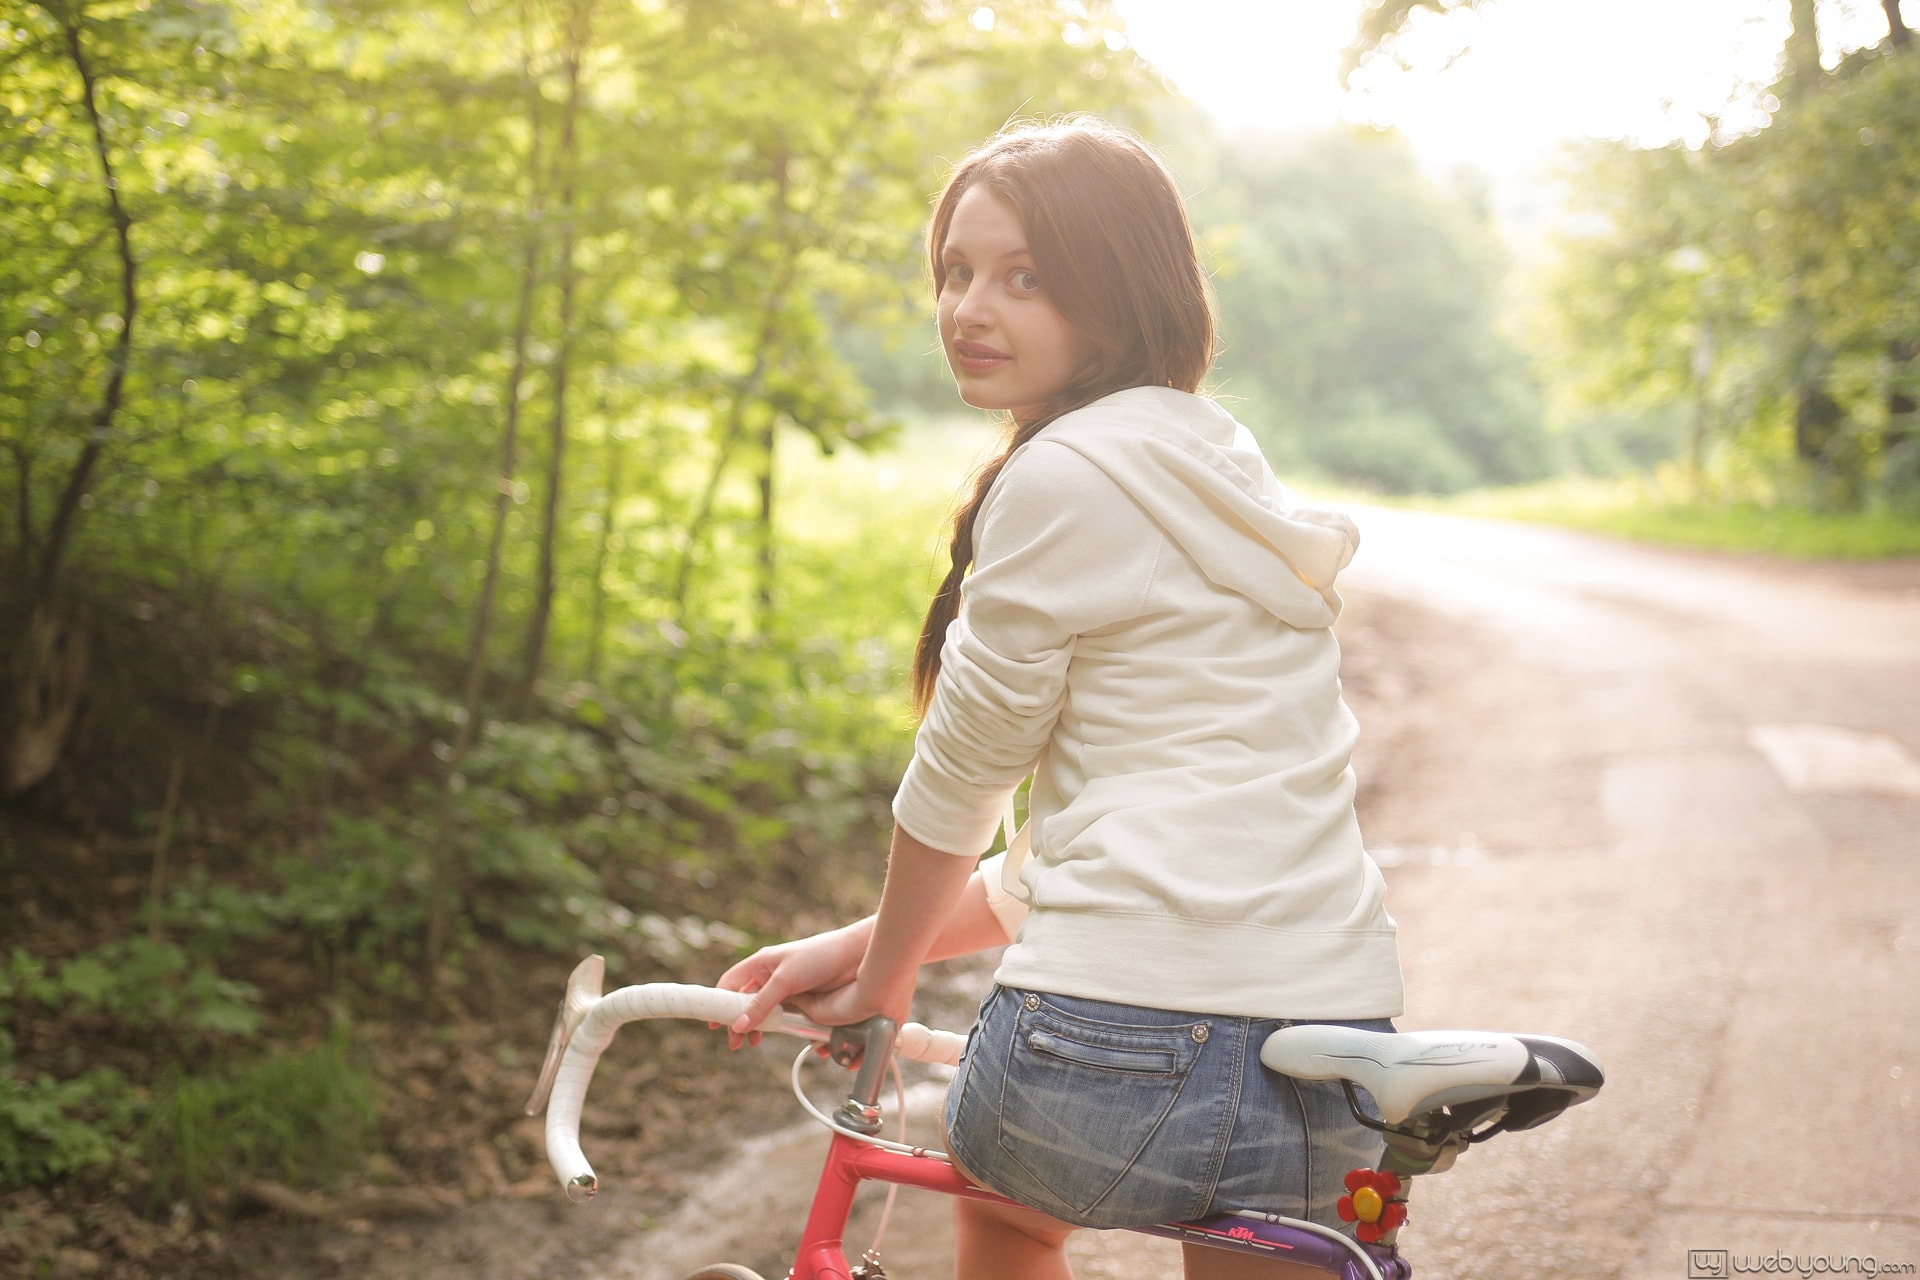 Girlsway 'Riding My Bike' starring Liona (Photo 4)